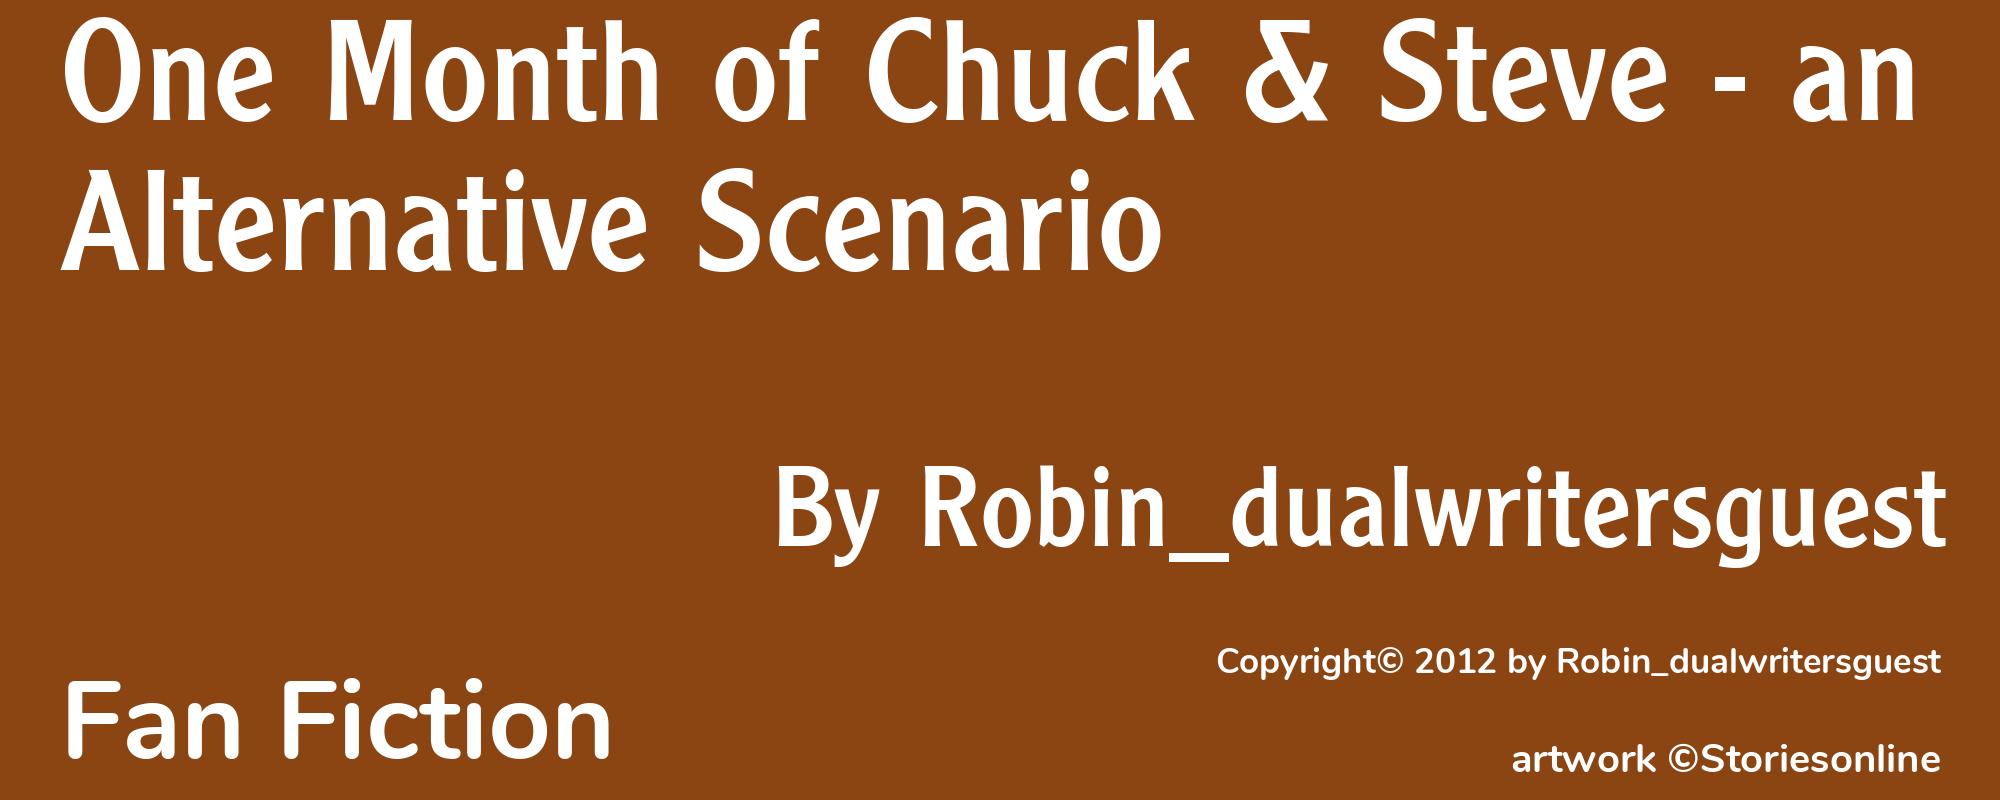 One Month of Chuck & Steve - an Alternative Scenario - Cover